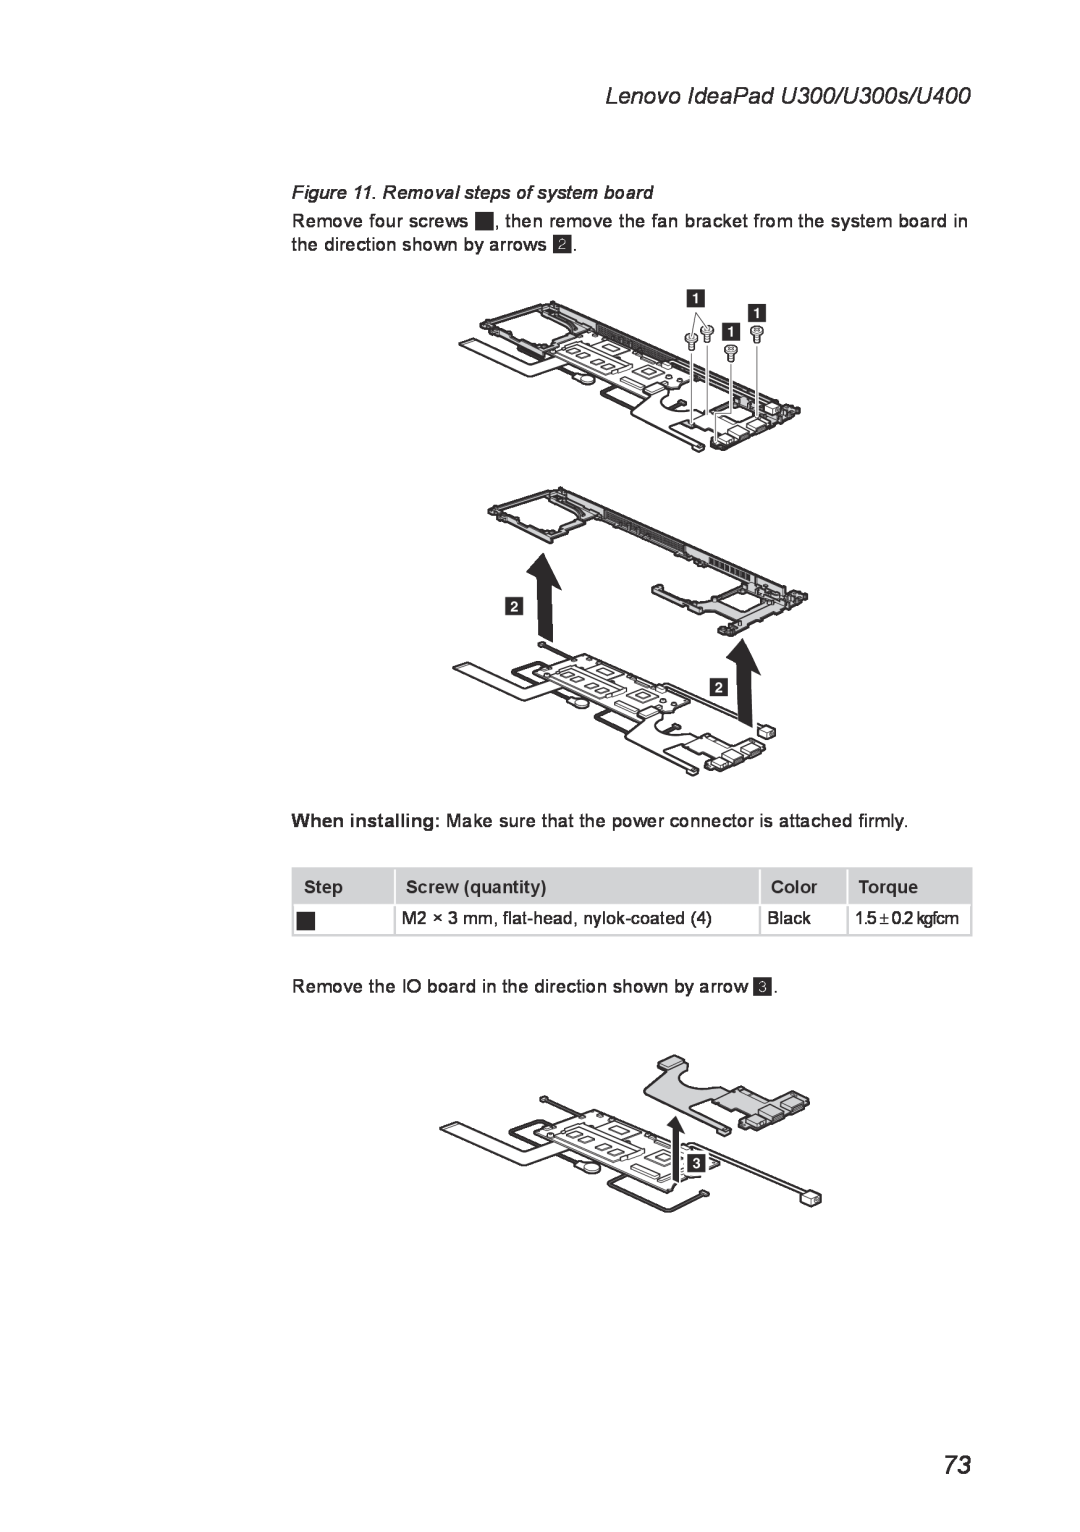 Lenovo U300S manual Removal steps of system board, Lenovo IdeaPad U300/U300s/U400, Step, Screw quantity, Color, Torque 